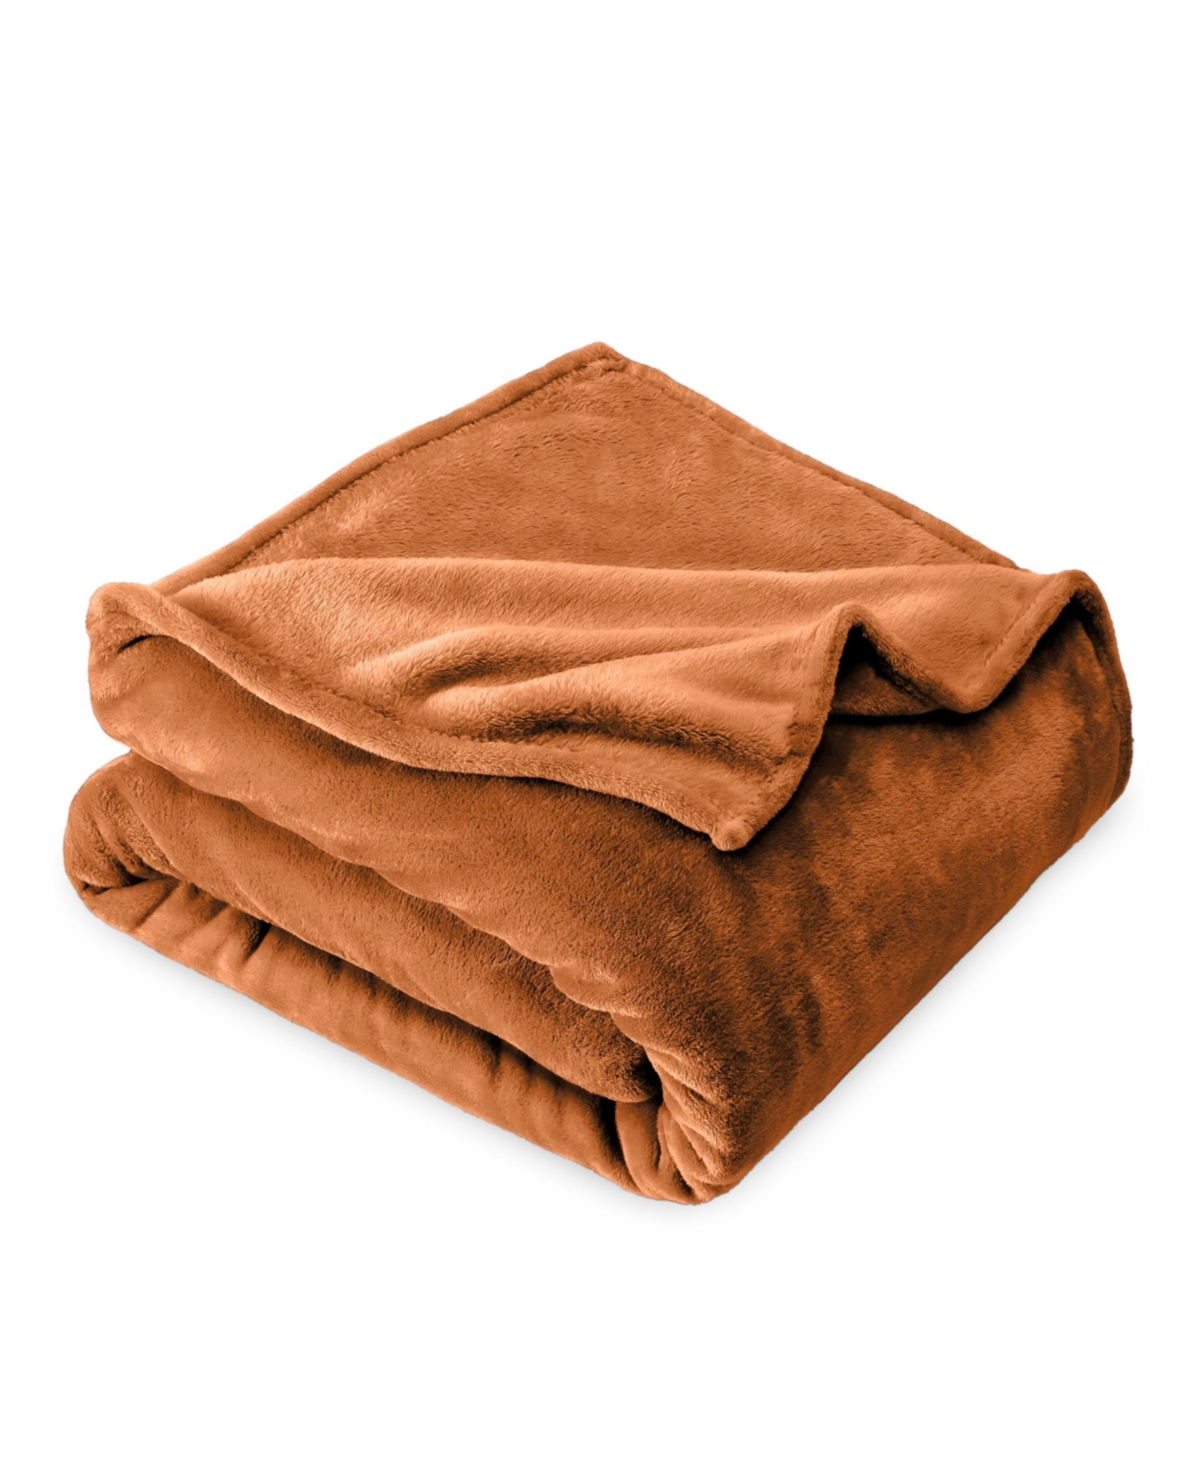 Bare Home Microplush Fleece Blanket, Twin/Twin XL - Macy's